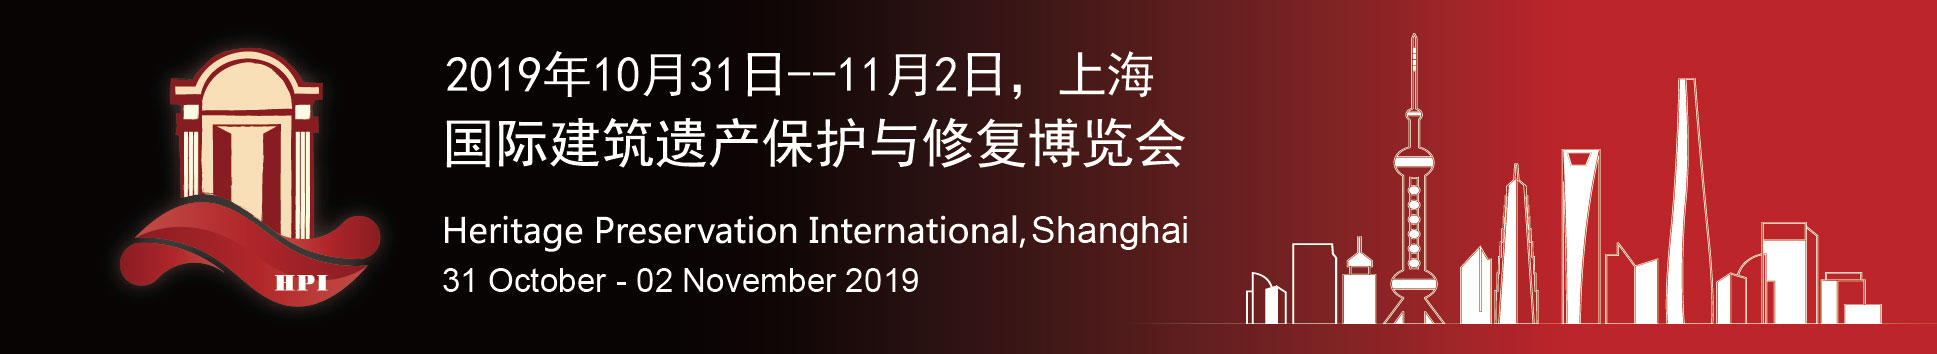 Heritage Preservation International, Shanghai 31 October - 2 November 2019